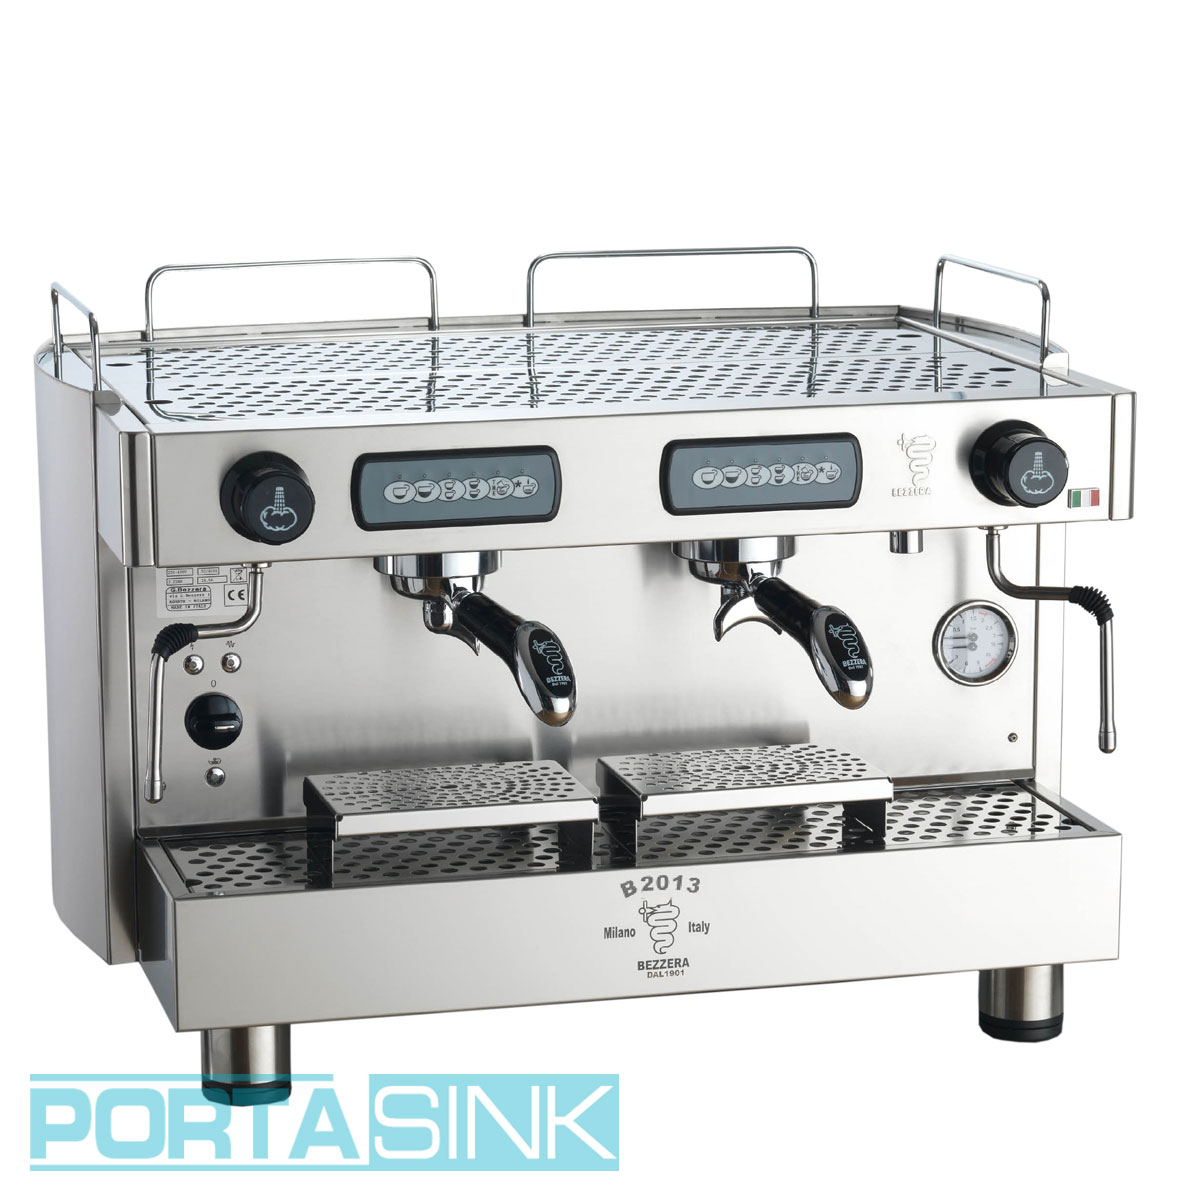 https://www.porta-sink.com/wp-content/uploads/2018/12/porta-sink-espresso-machine-fully-auto-2g-00.jpg